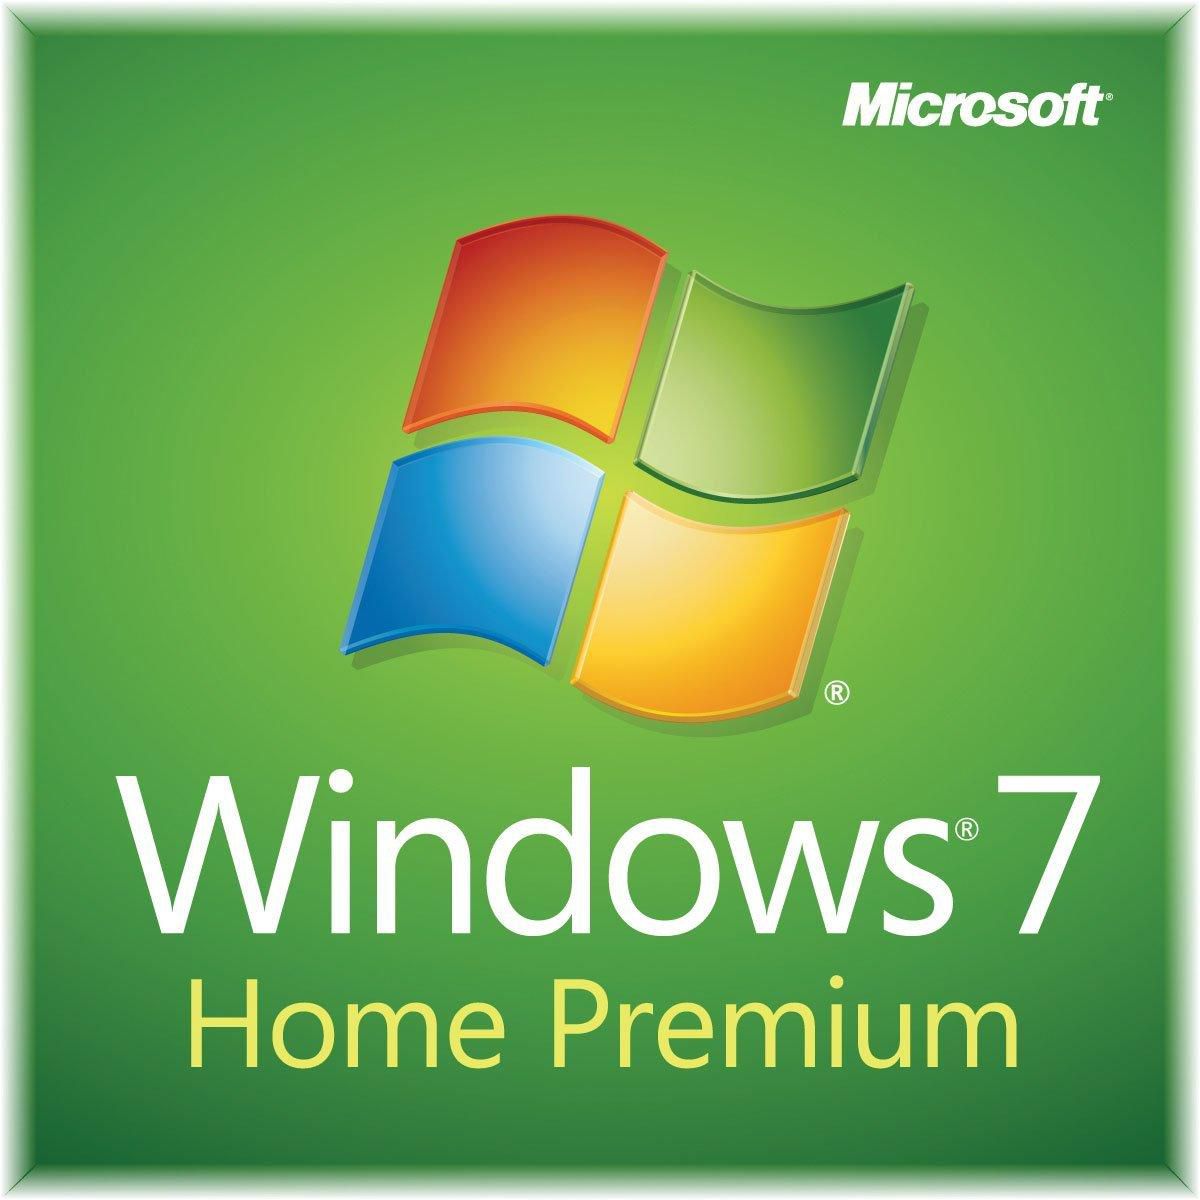 Microsoft Windows 7 Home Premium SP1 64bit System Builder DVD 1 Pack